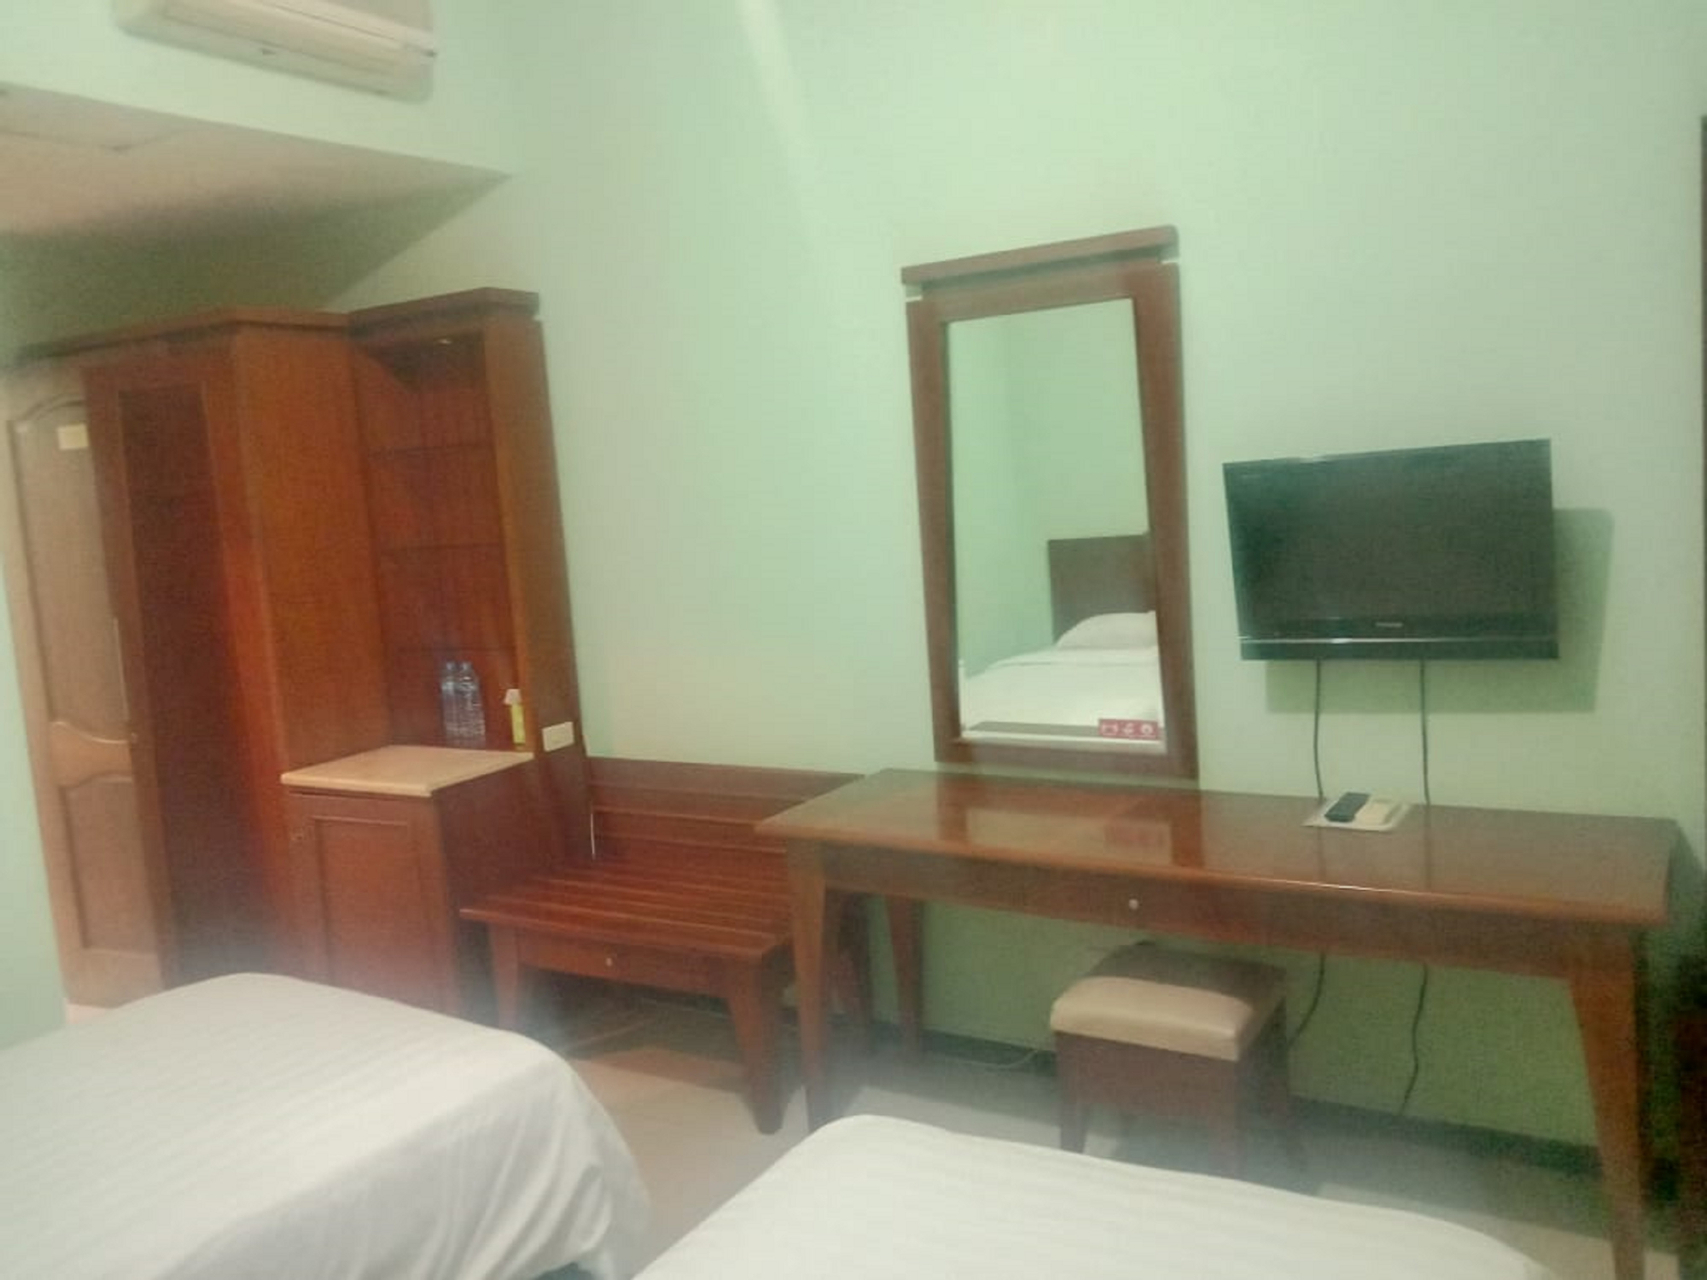 Bedroom 2, The Srikandi Hotel, Yogyakarta